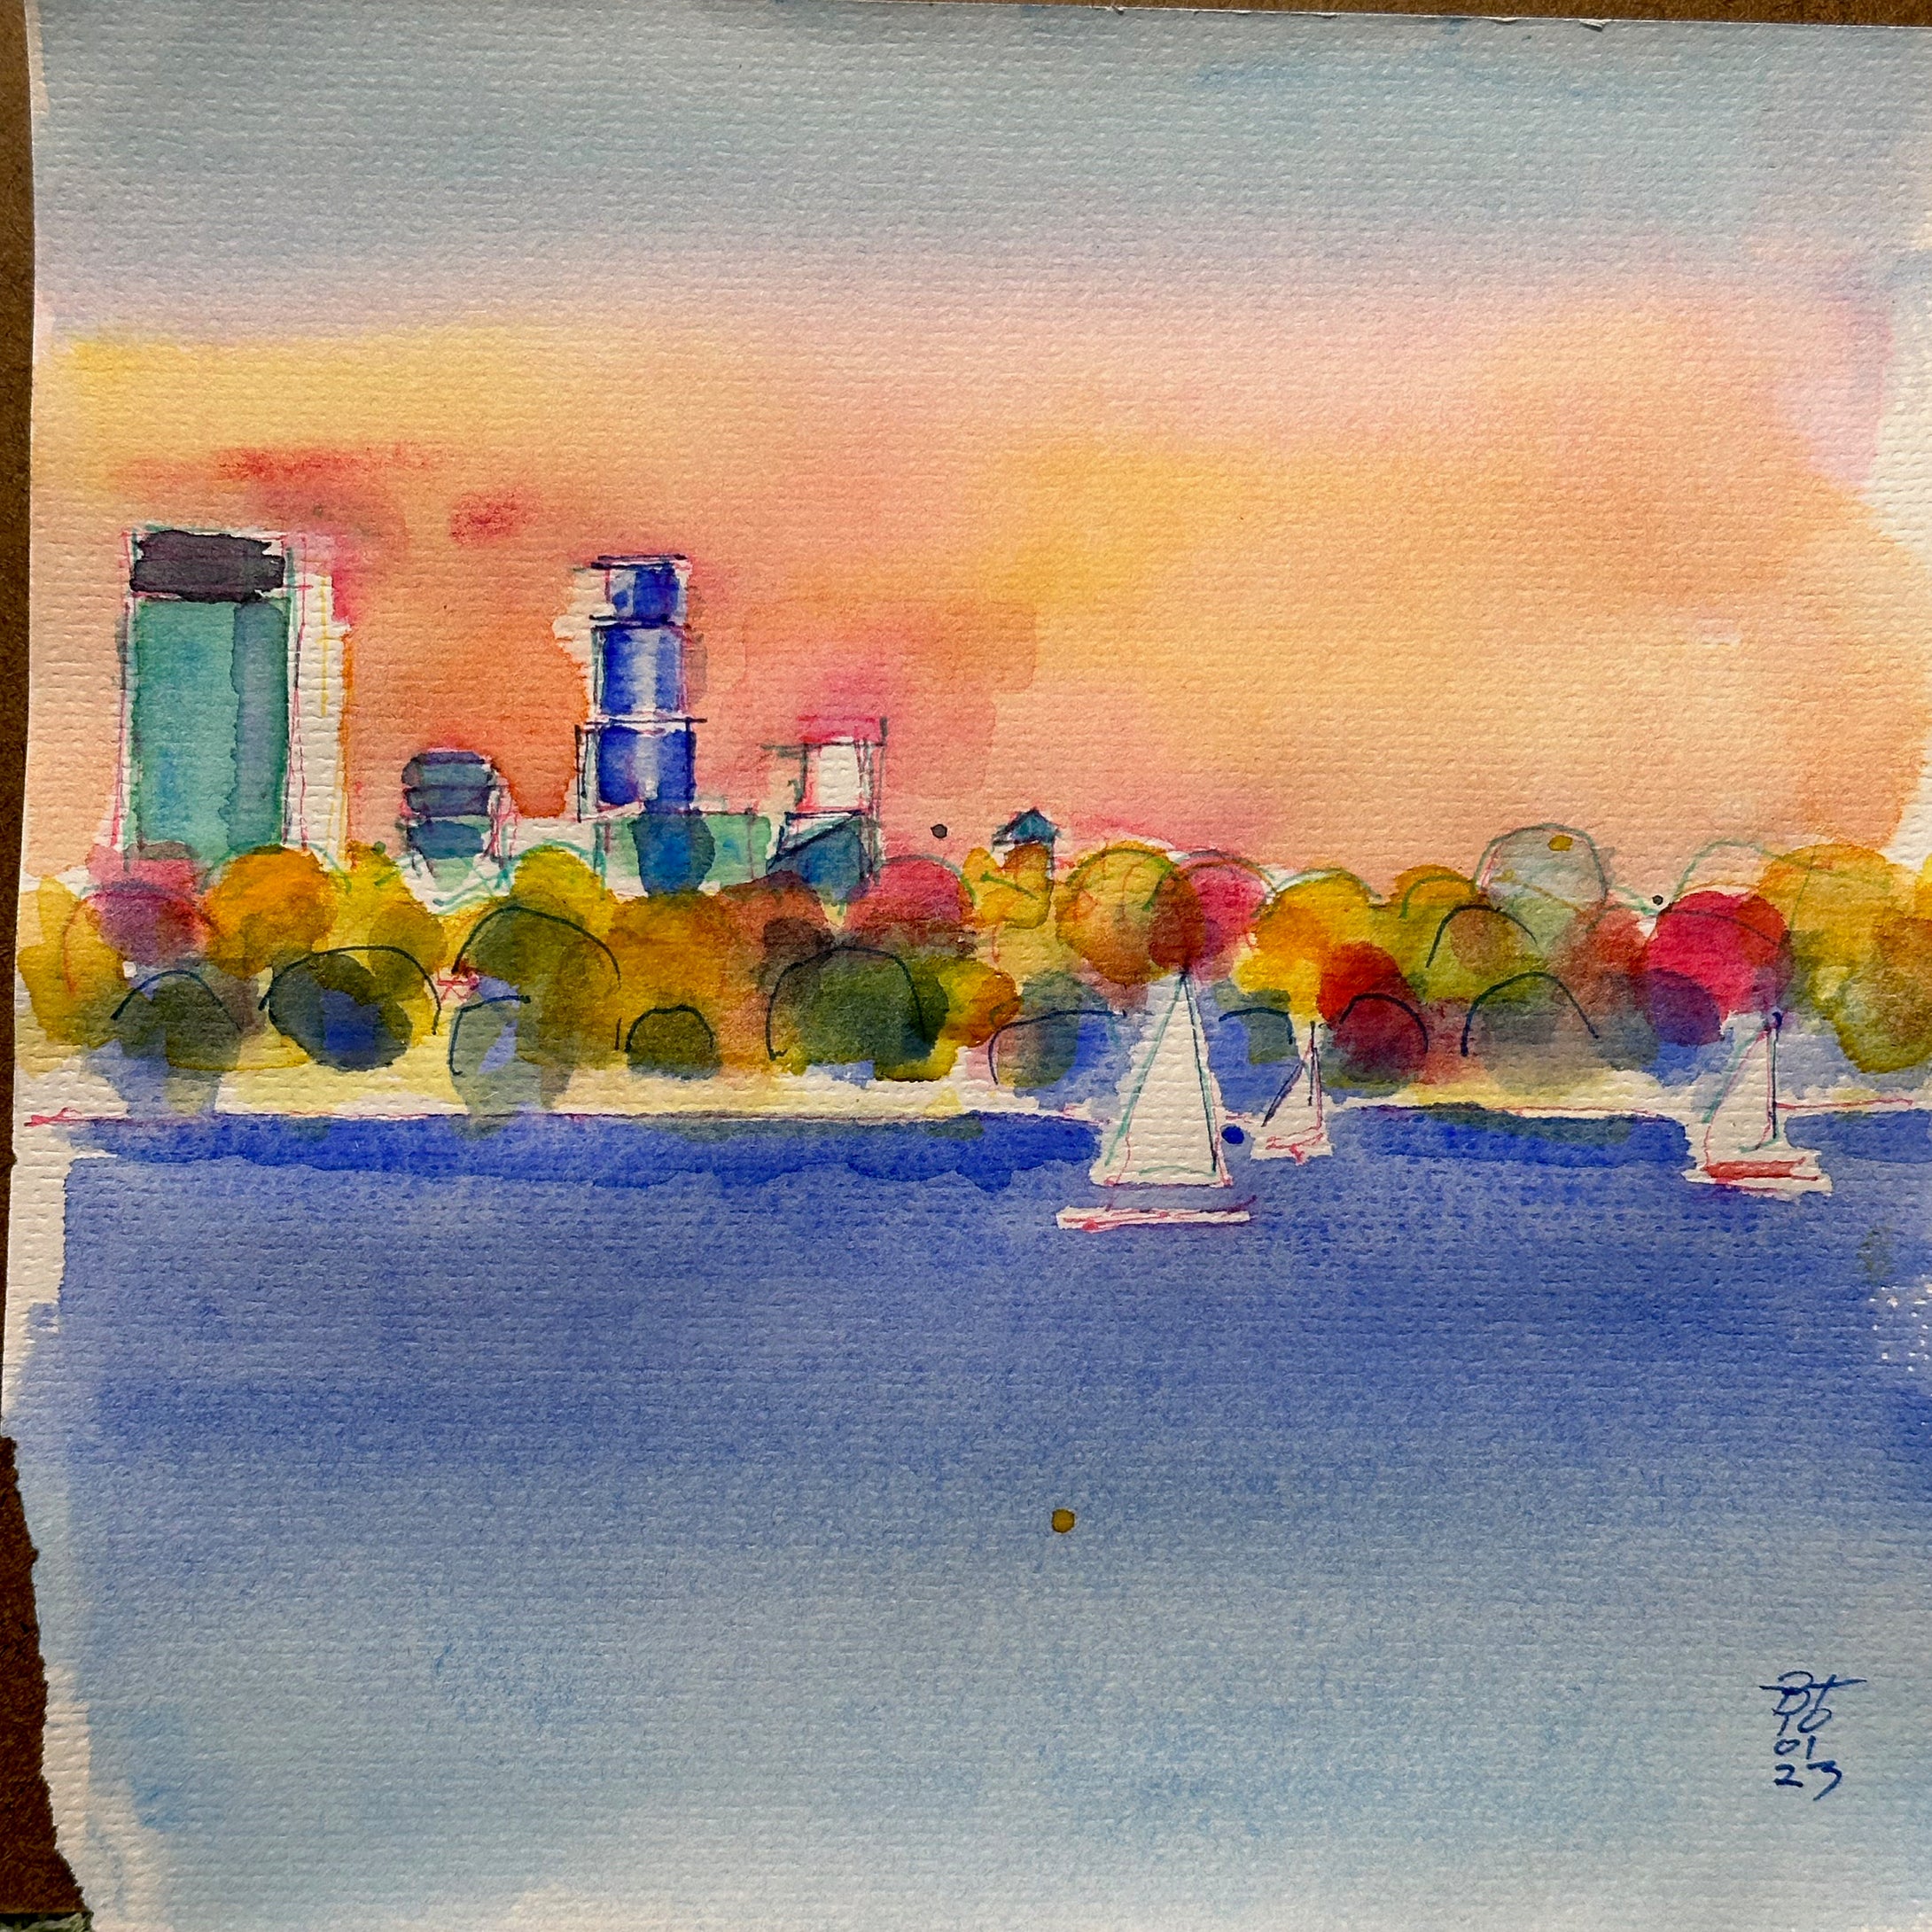 Minneapolis skyline across lake, 3 sailboats, 10.01.23